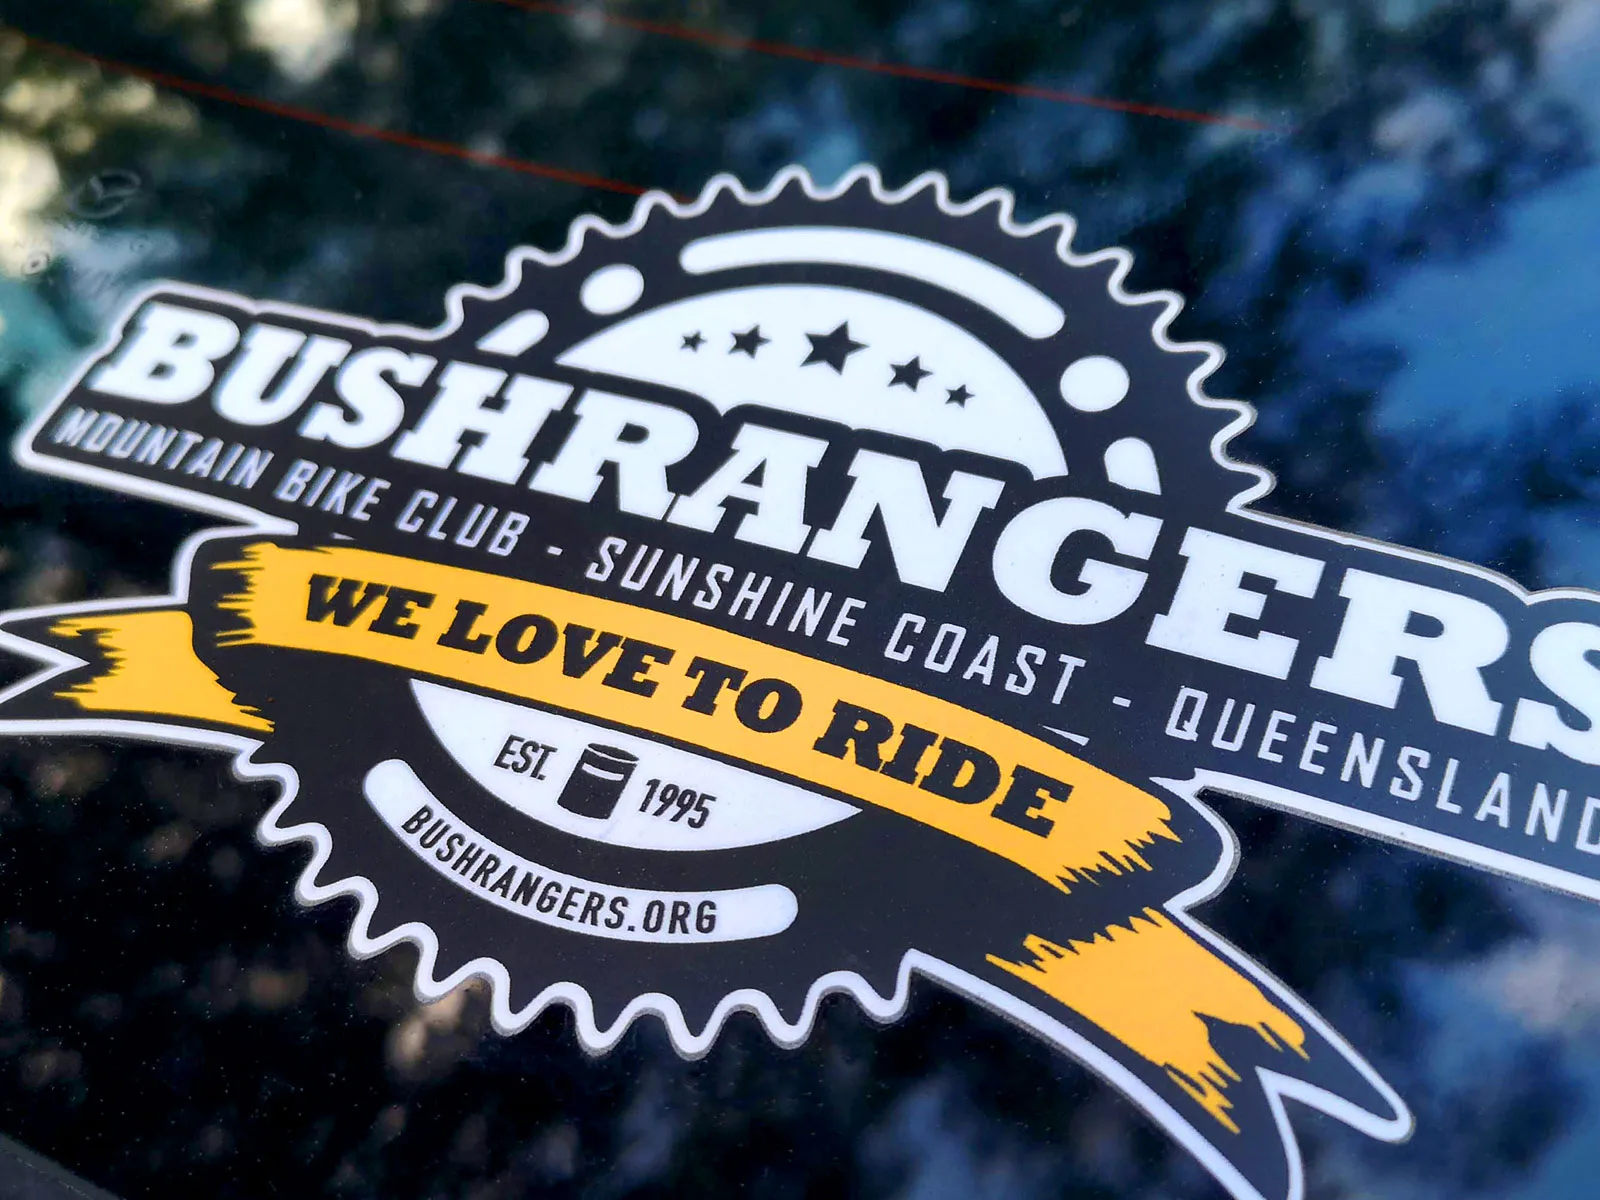 Photo of a Bushranger Club sticker stuck to a car's windscreen